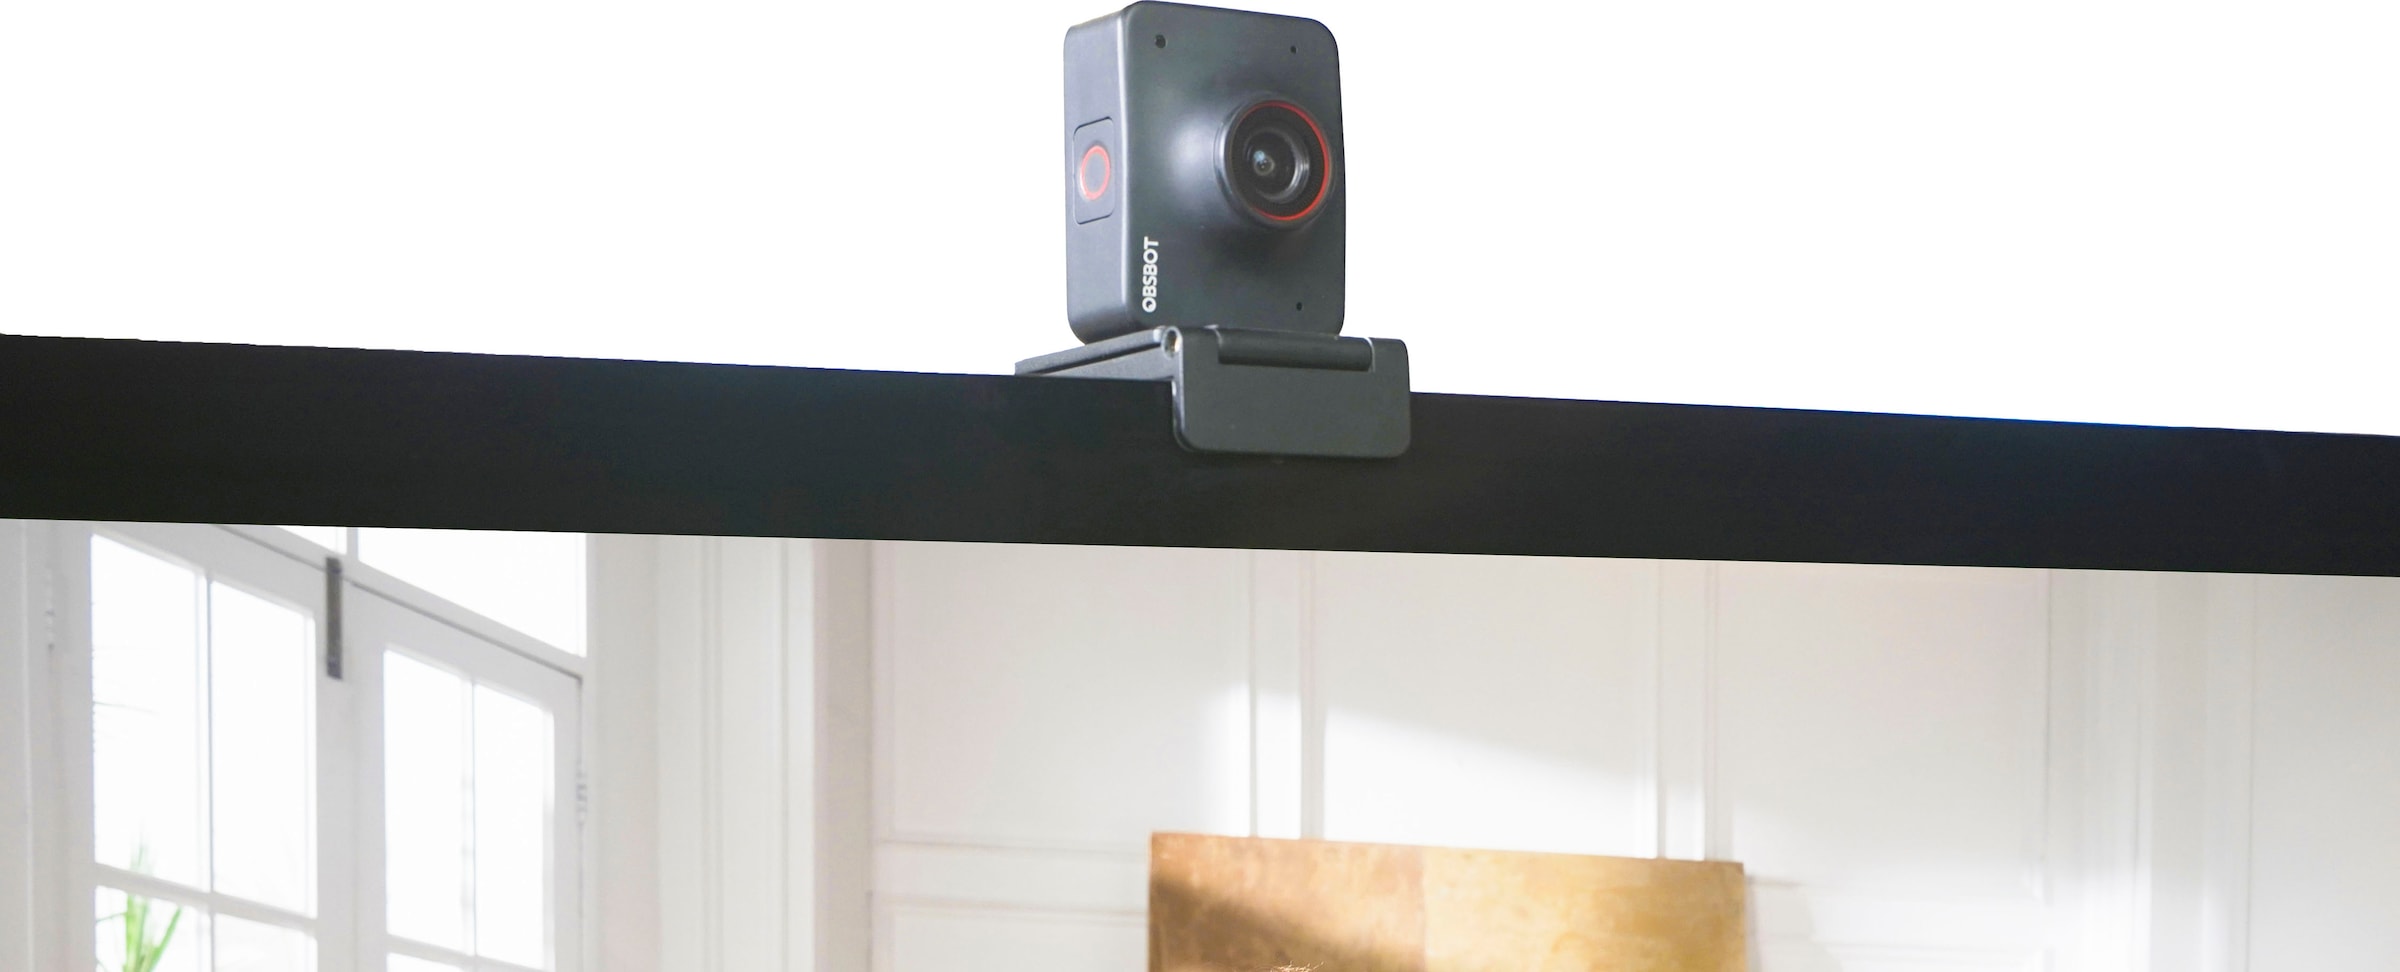 OBSBOT Webcam »Meet 4K«, 4K Ultra HD, professionelle Webcam für Livestreams